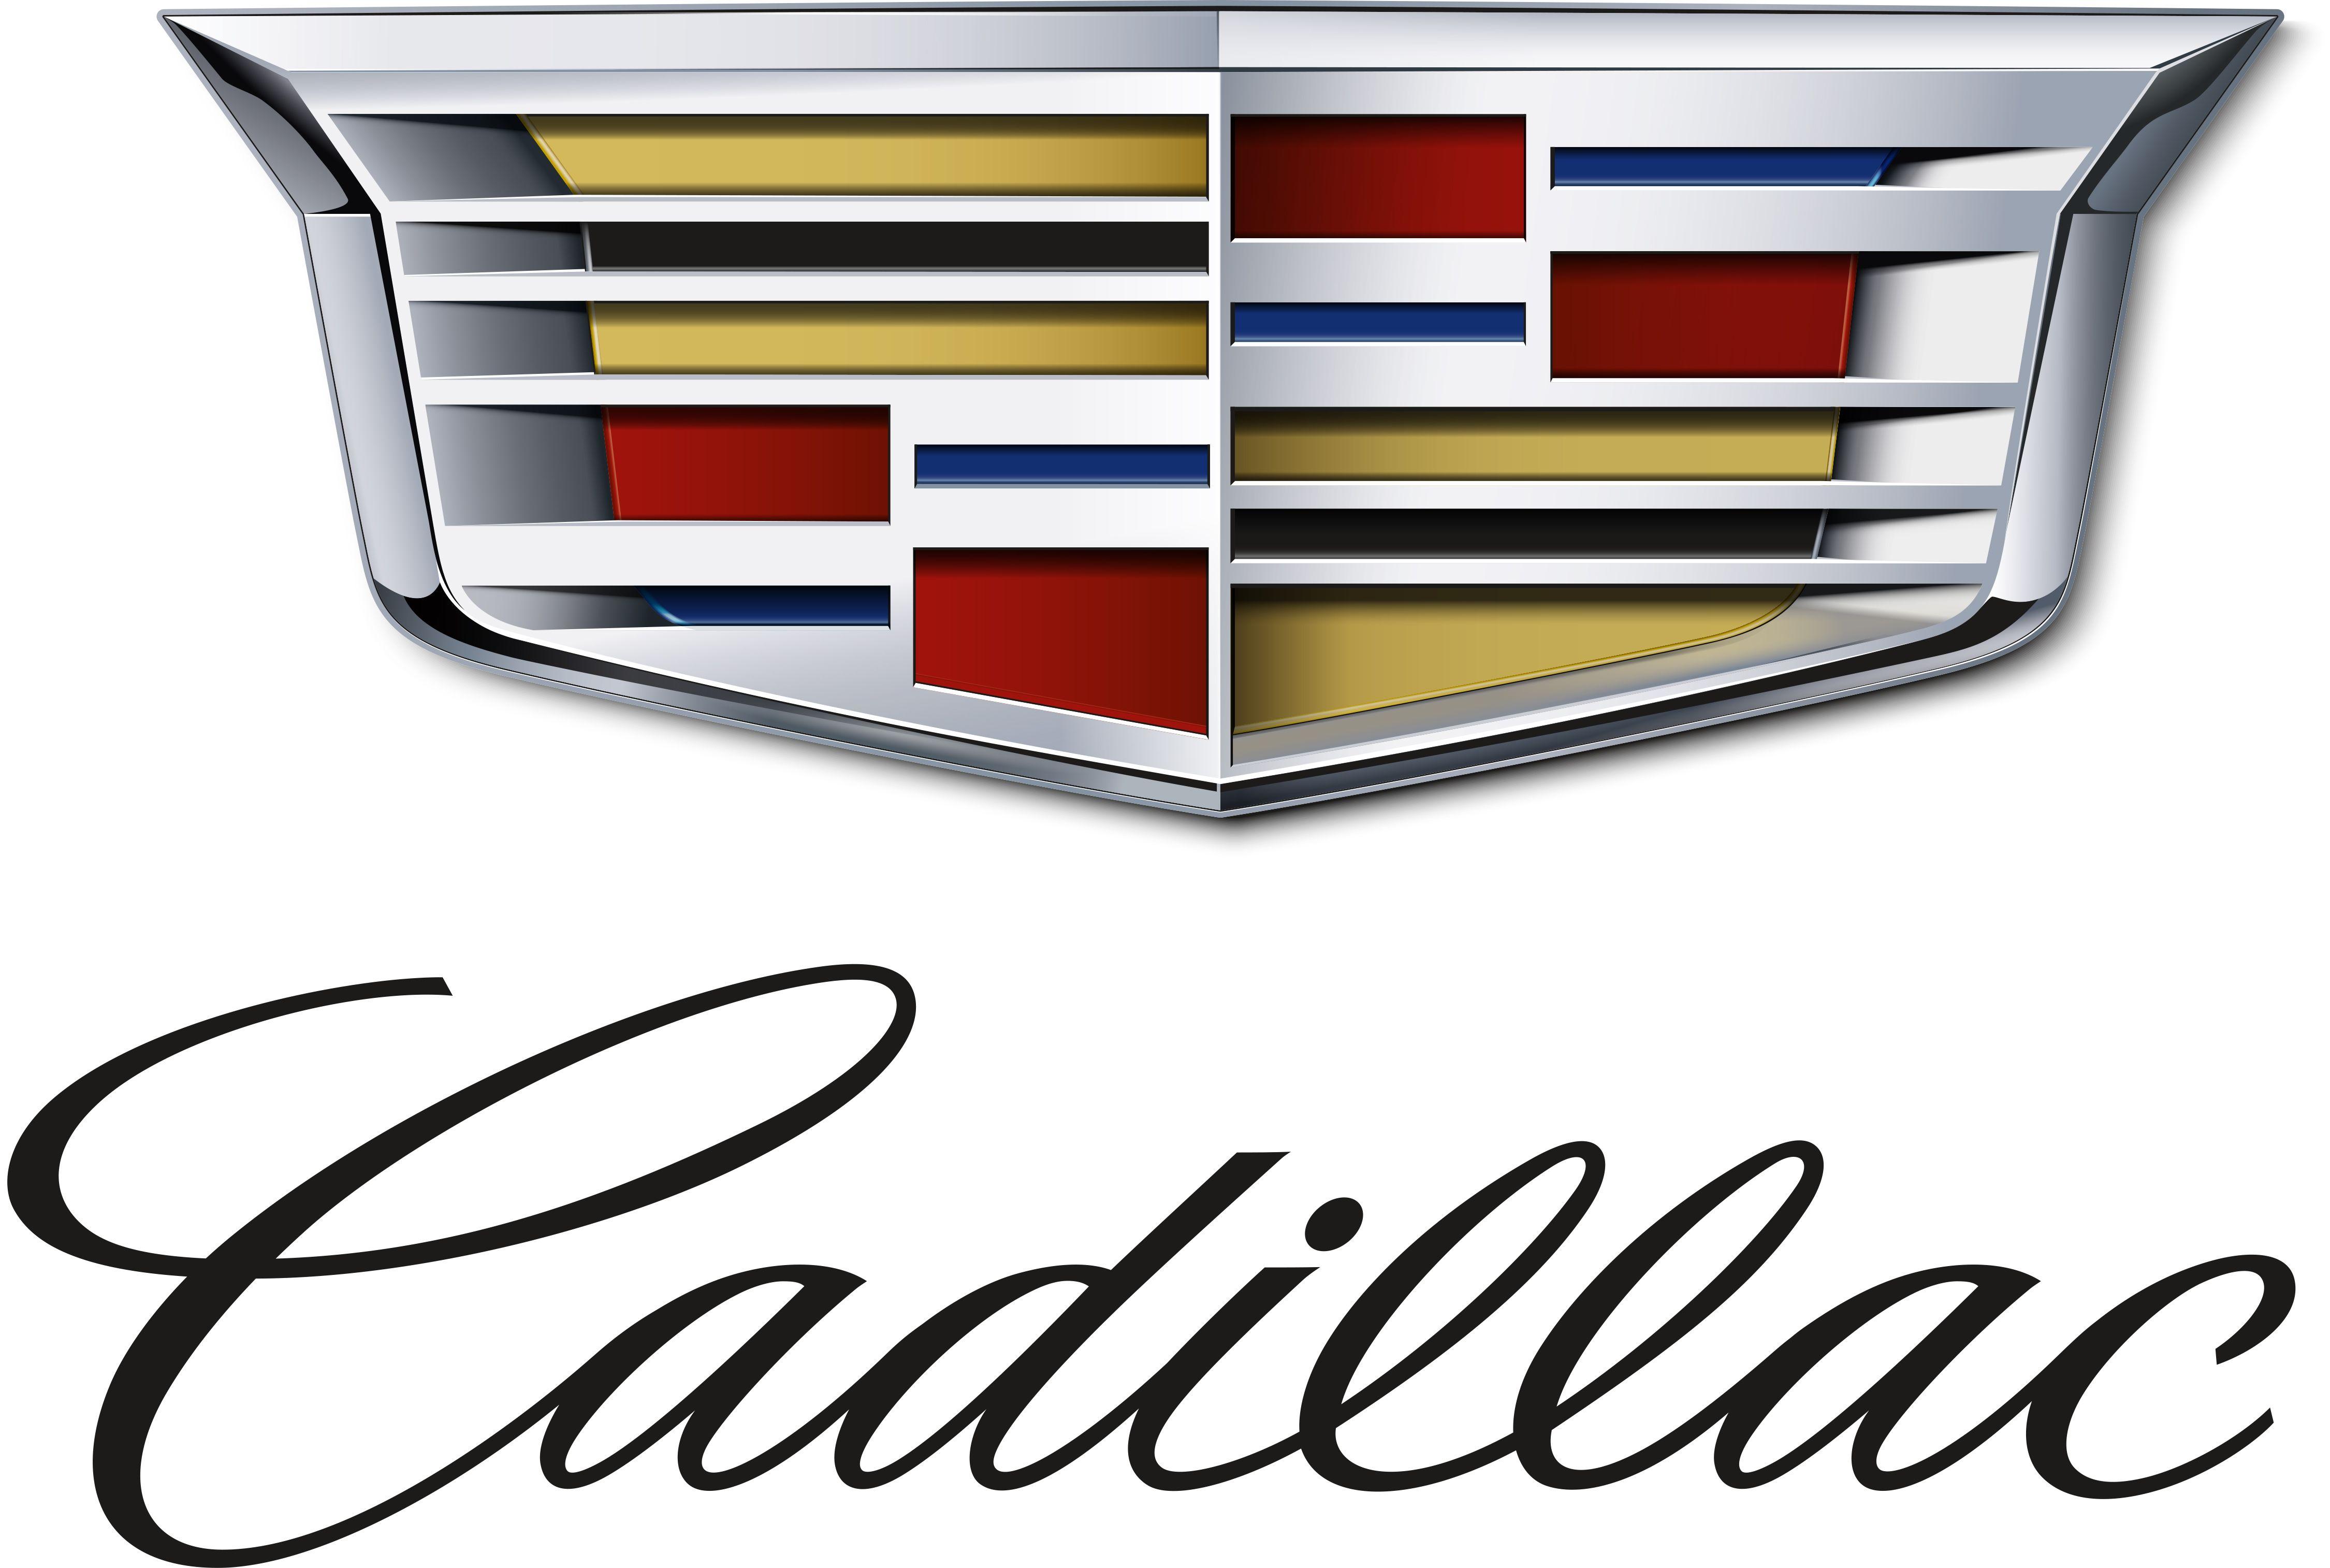 2014 Cadillac Logo - GM Canadian Corporate Newsroom